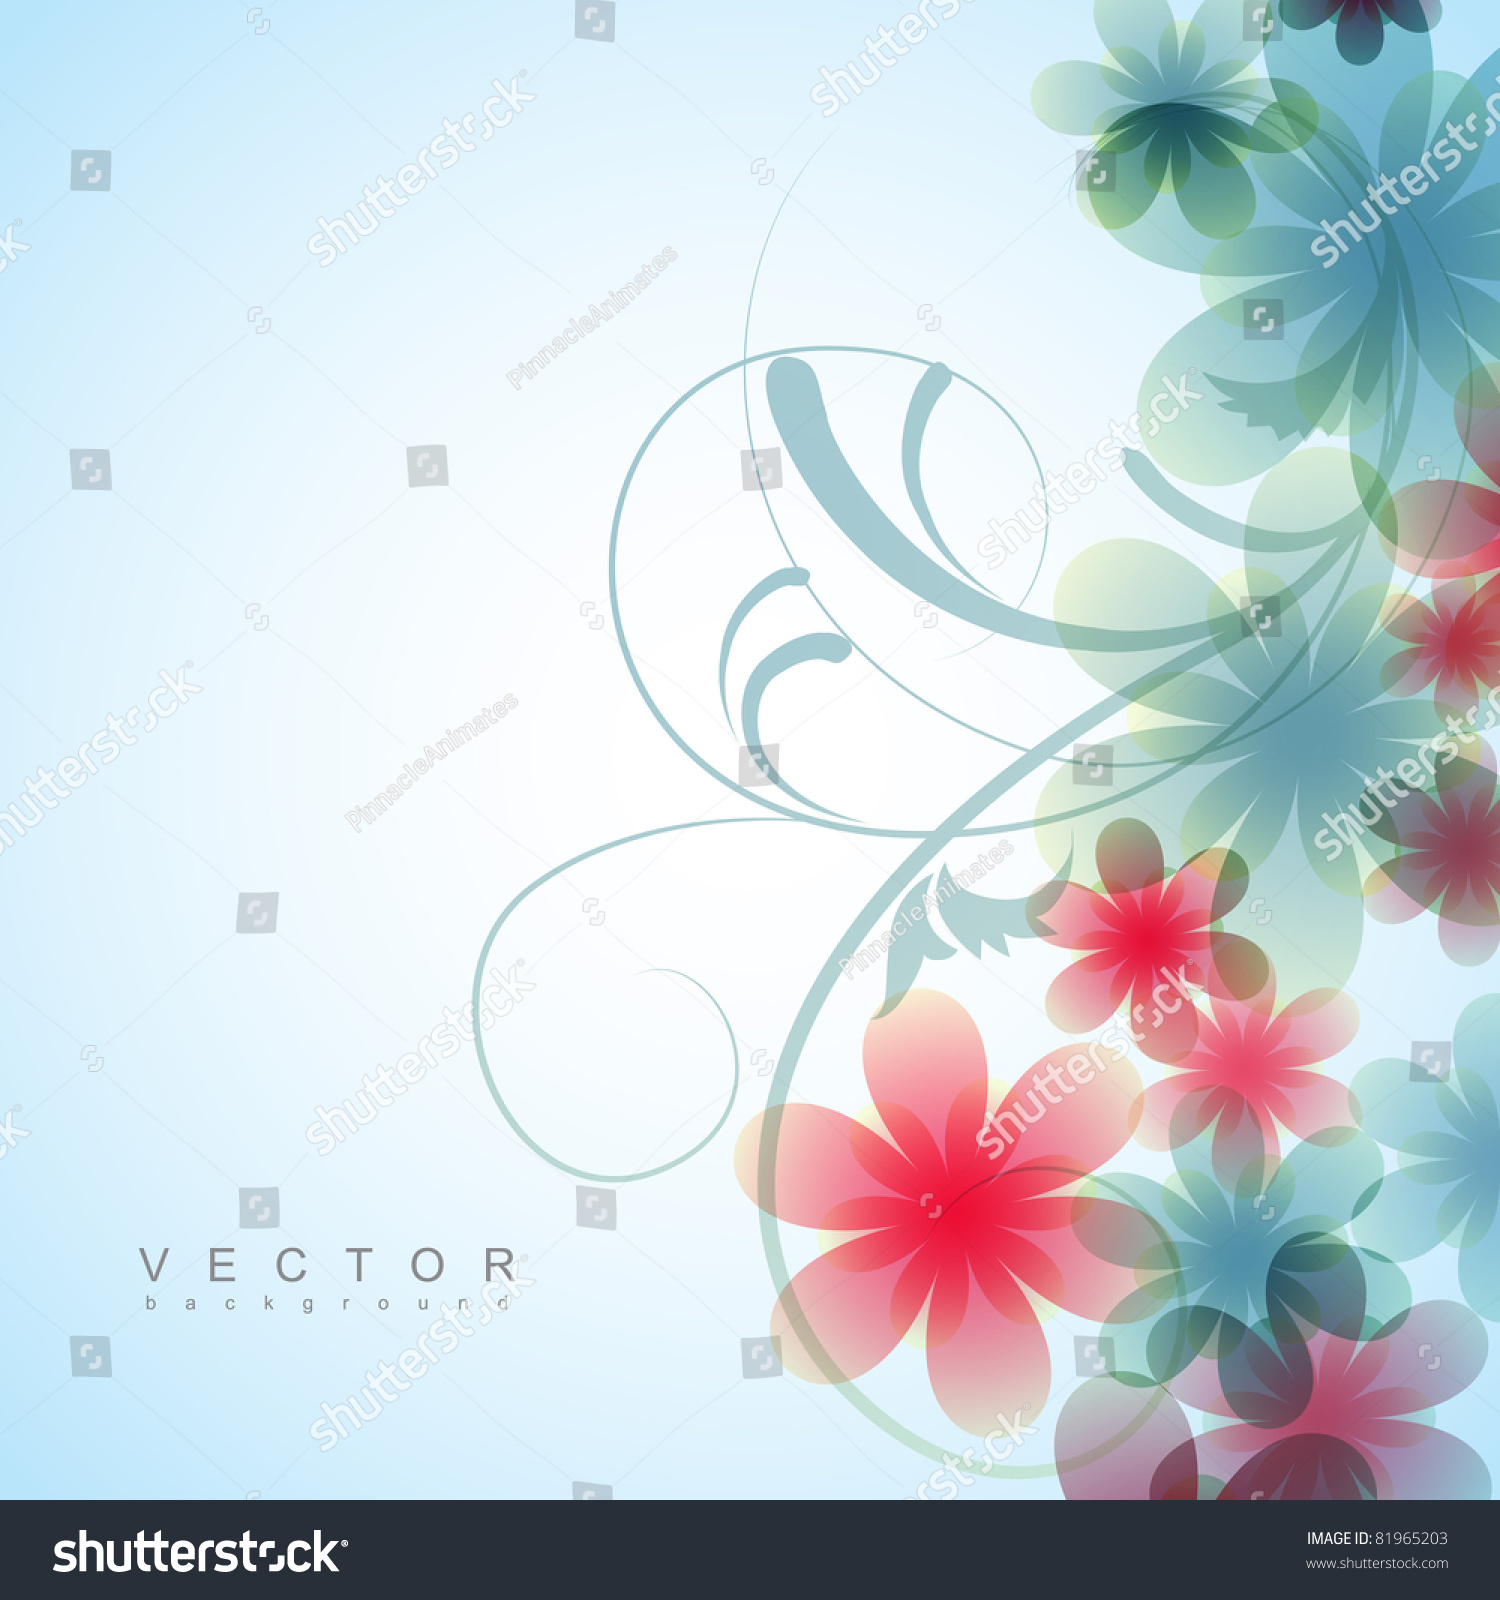 Romantic flower background 01 vector Free Vector / 4Vector